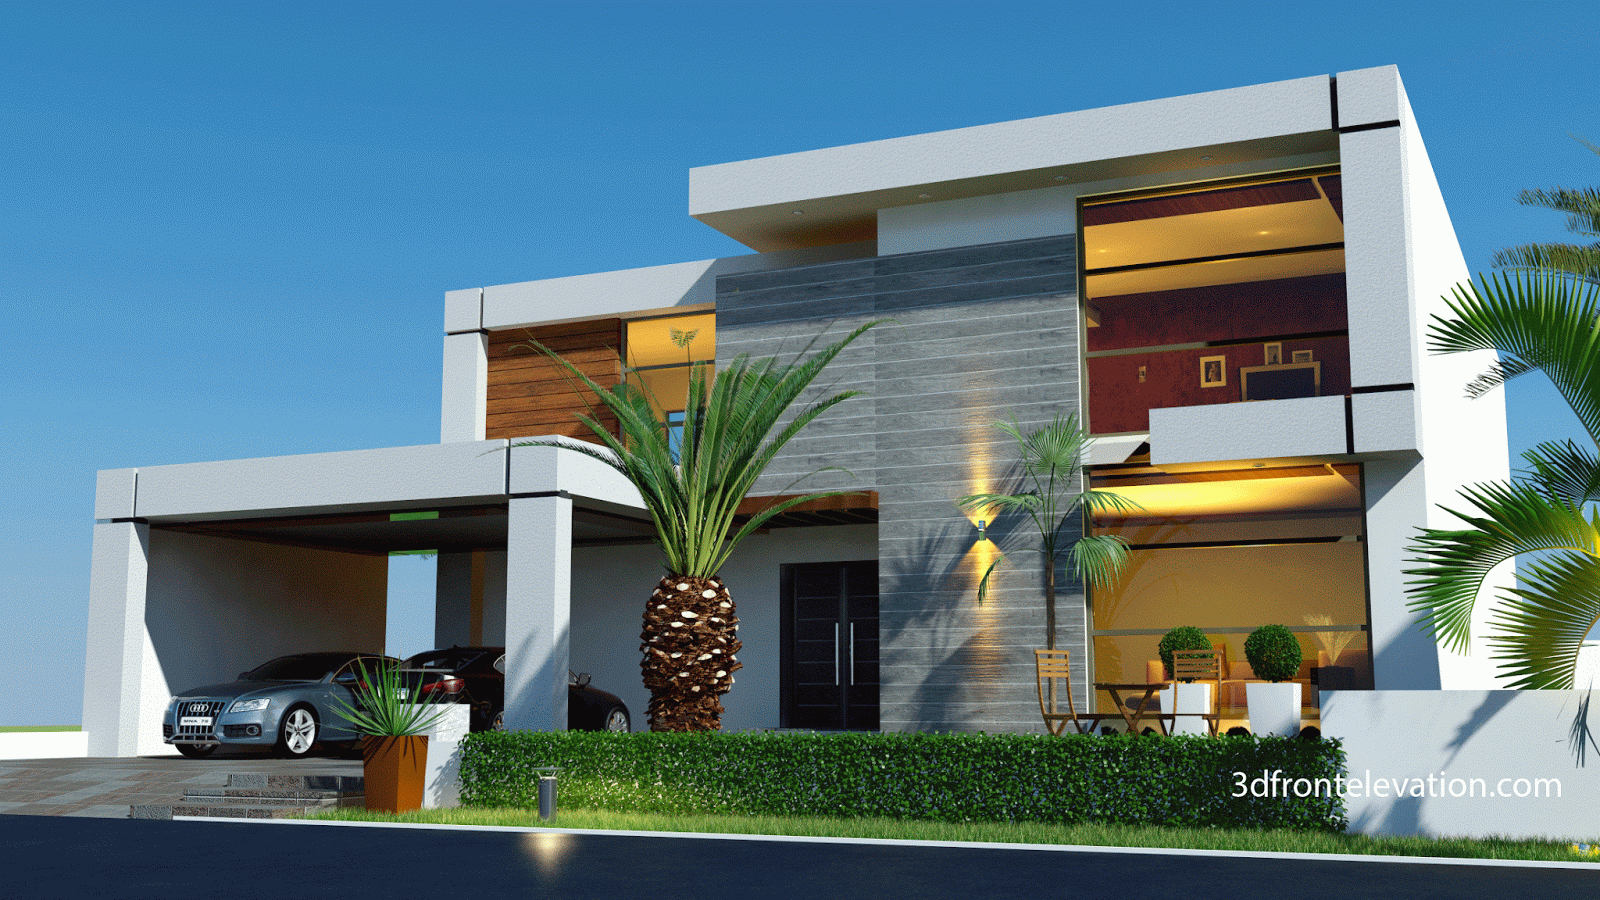 3D Front Elevation.com: Beautiful Contemporary House Design 2016